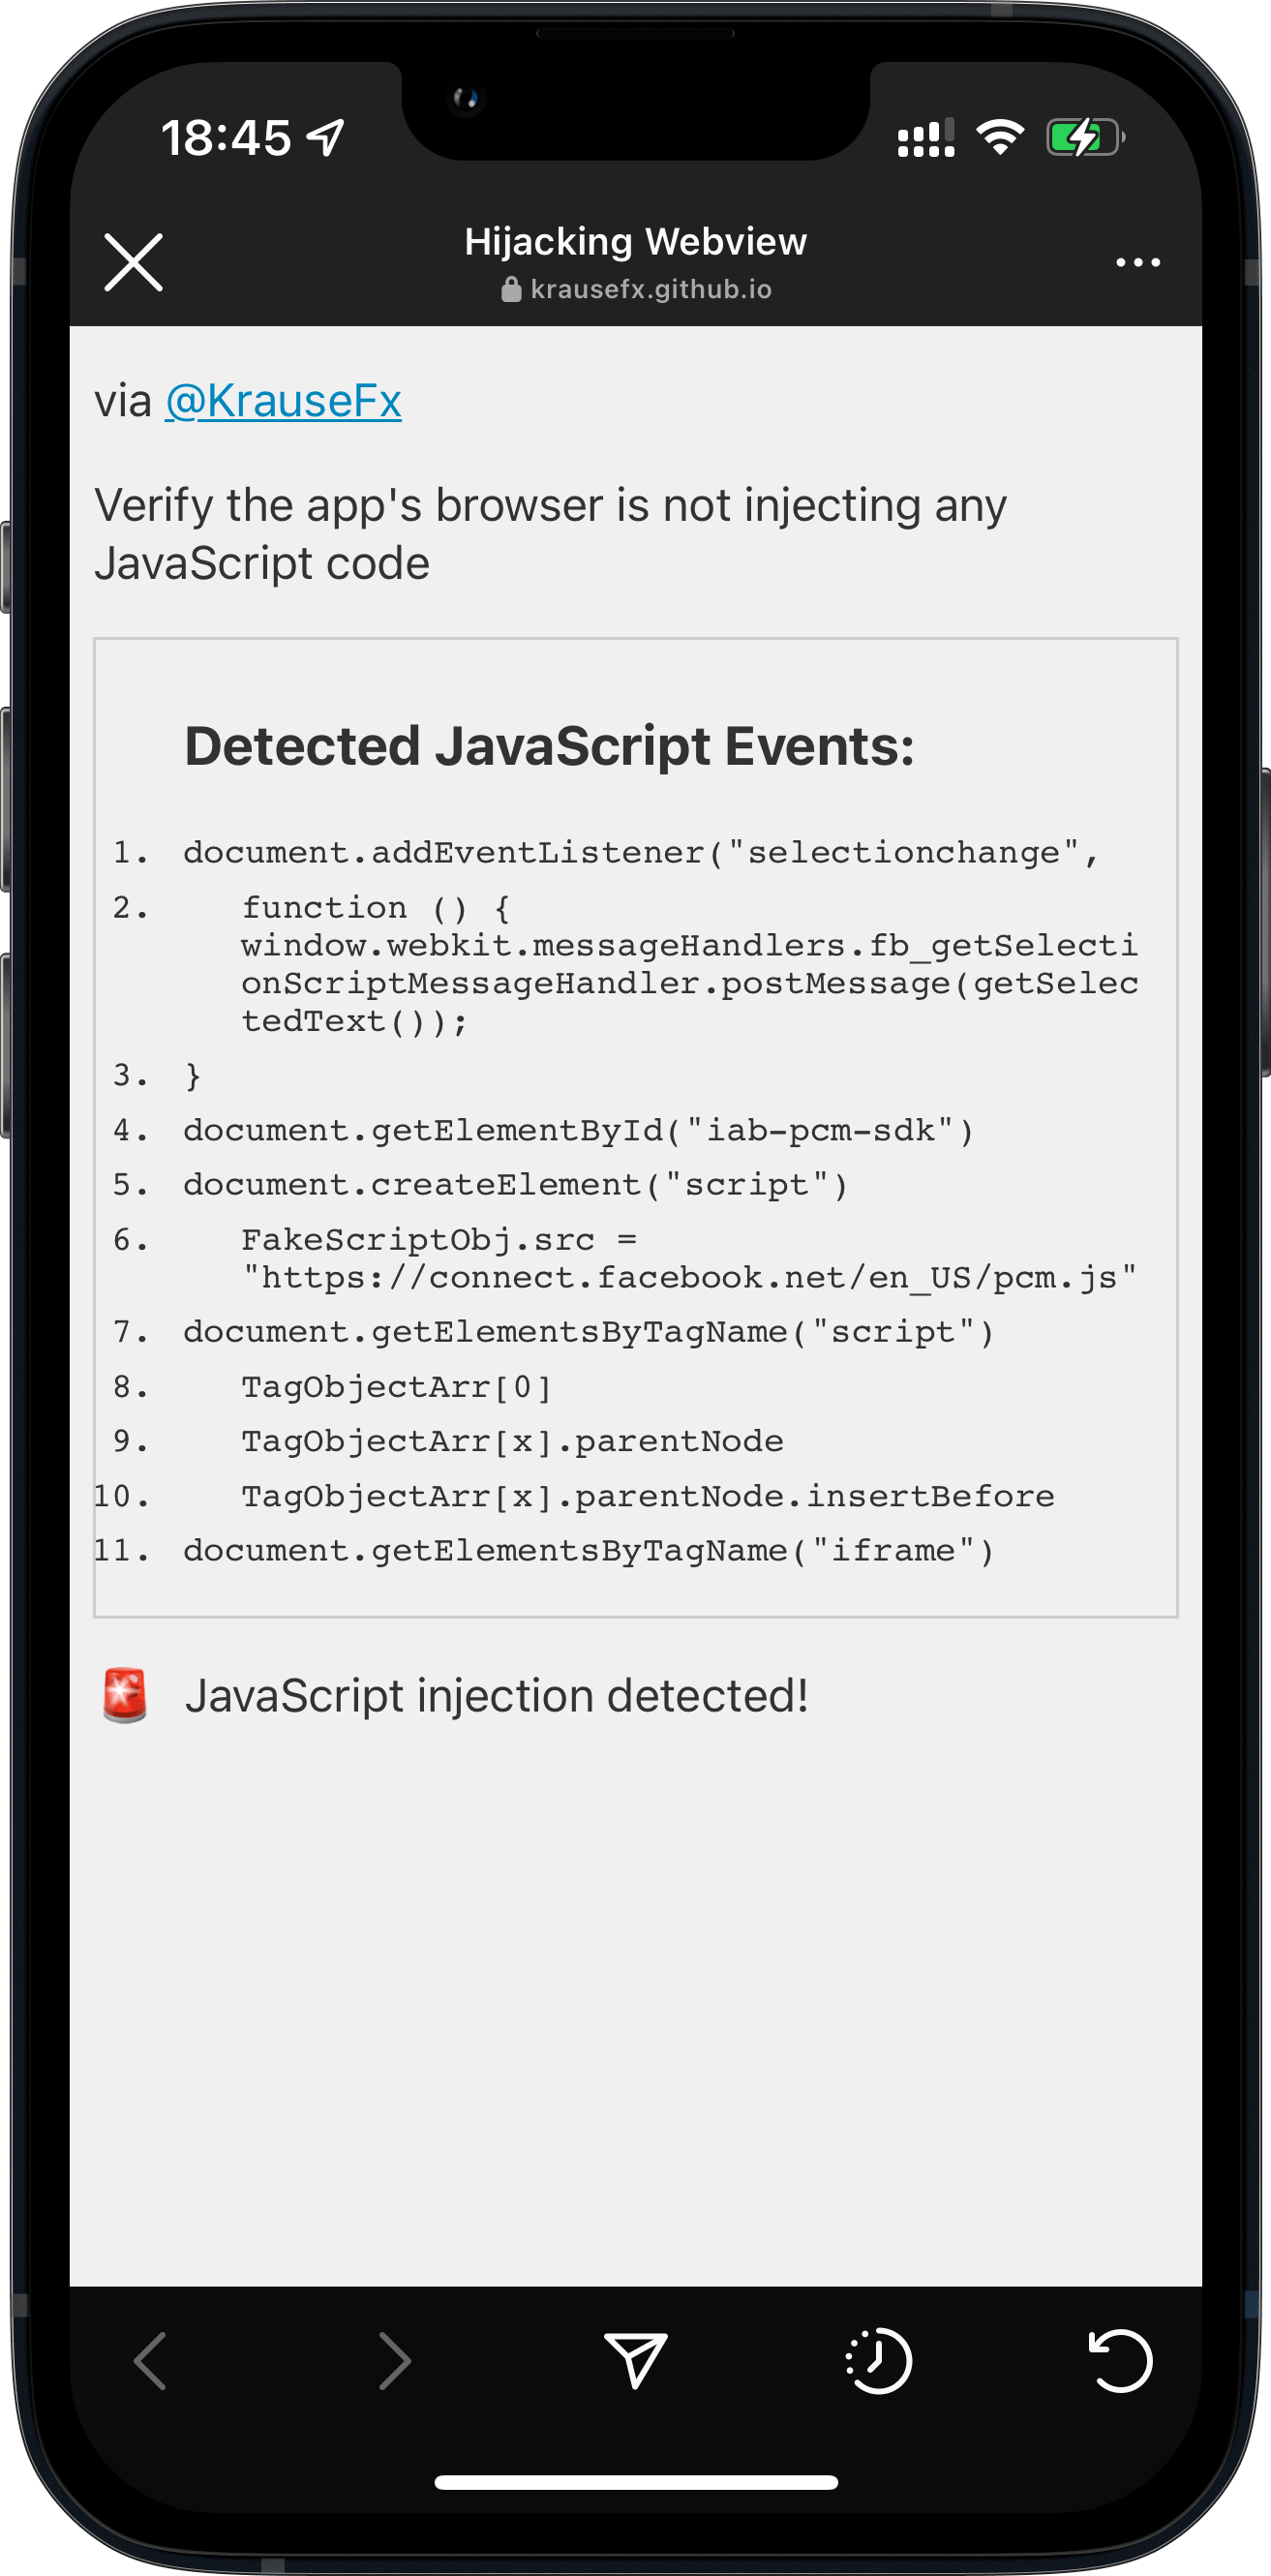 An iPhone screenshot, showing a website, rendering what commands got executed by the Instagram app in their in-app browser: 
      Detected JavaScript Events:
        1.
        document. addEventListener ('selectionchange'
        2.
        function ()
        {
        window.webkit.messageHandlers.fb getSelecti
        onScriptMessageHandler.postMessage(getSelec
        tedText)):
        3. }
        4.
        document. getElementById('iab-pcm-sdk')
        5.
        document.createElement ('script')
        6.
        FakeScriptobj.src
        'https://connect.facebook.net/en US/pcm.is'
        7. document. getElementsByTagName ('script')
        8.
        TagObjectArr[0]
        9.
        TagObjectArr[x].parentNode
        10.
        TagobjectArr[x].parentNode.insertBefore
        11.
        document.getElementsByTagName('iframe')